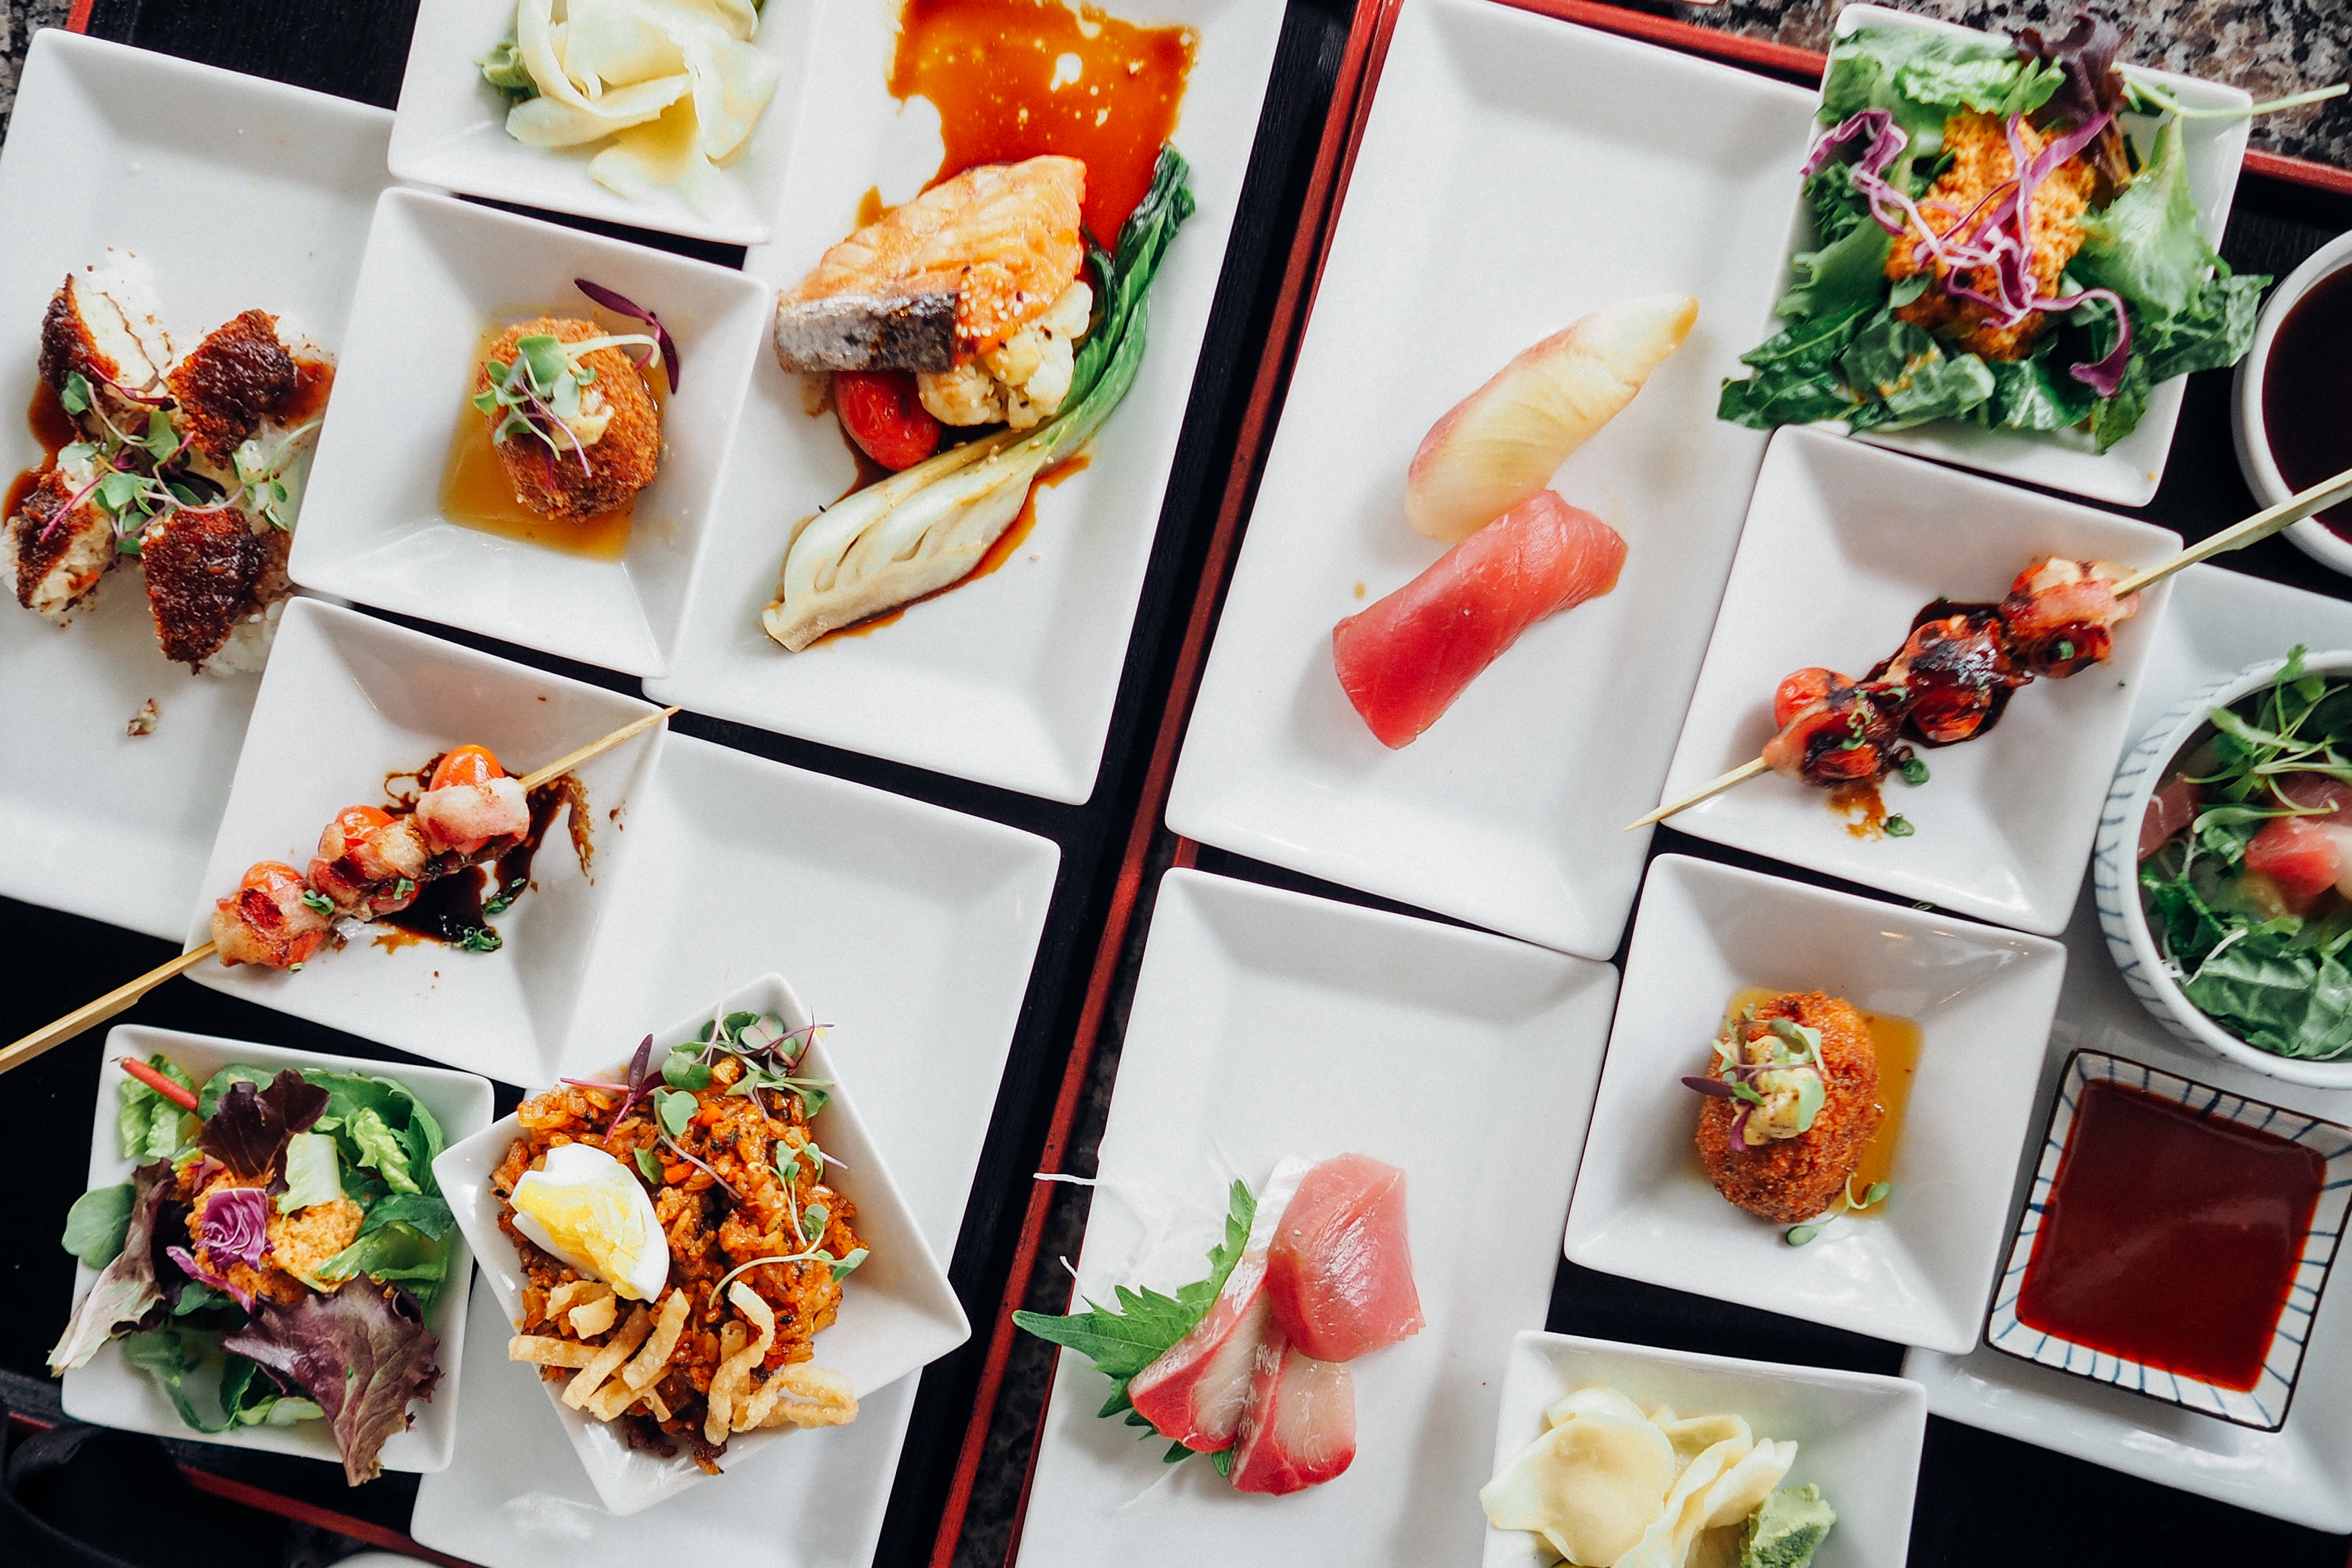 Umi Winter Park Debuts New Lunch “Bento Box”